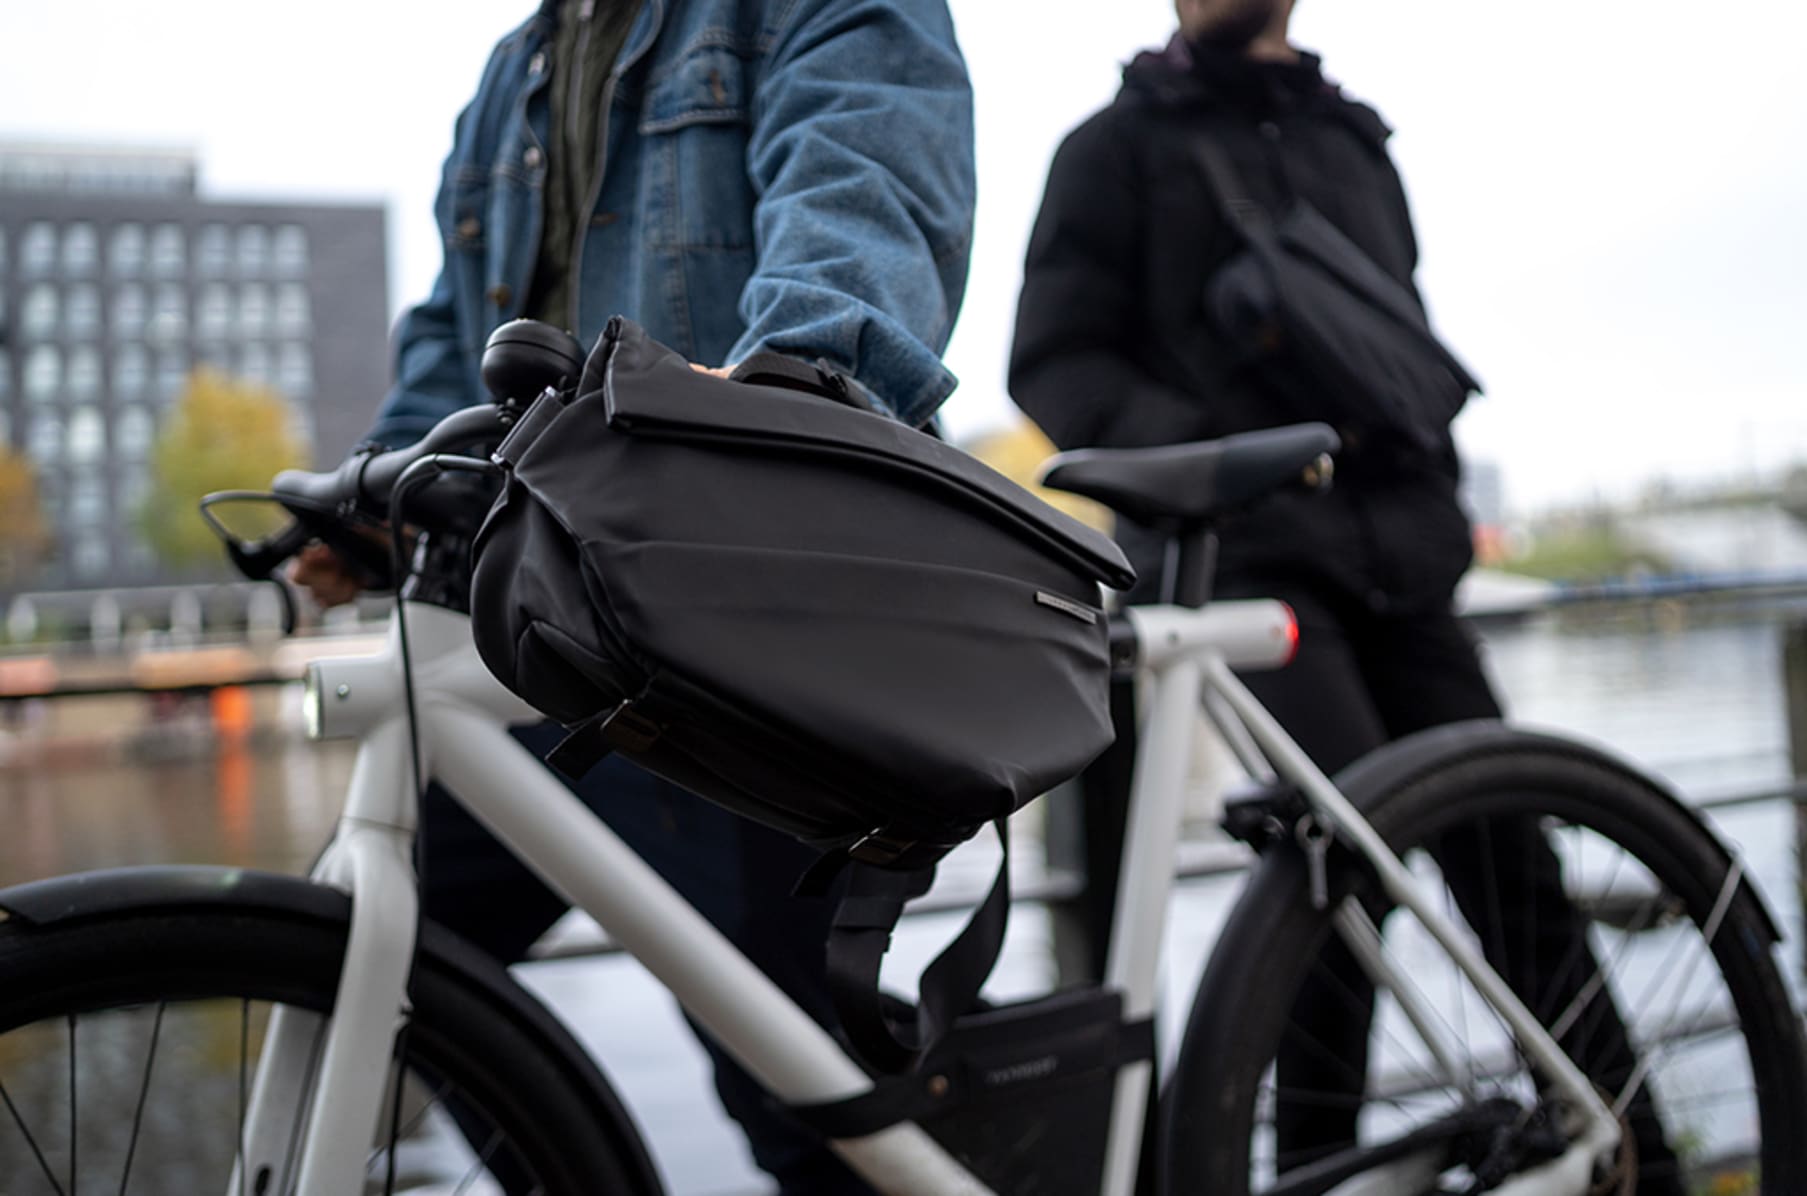  NIID Radiant Urban Sling Bag - Quick Access